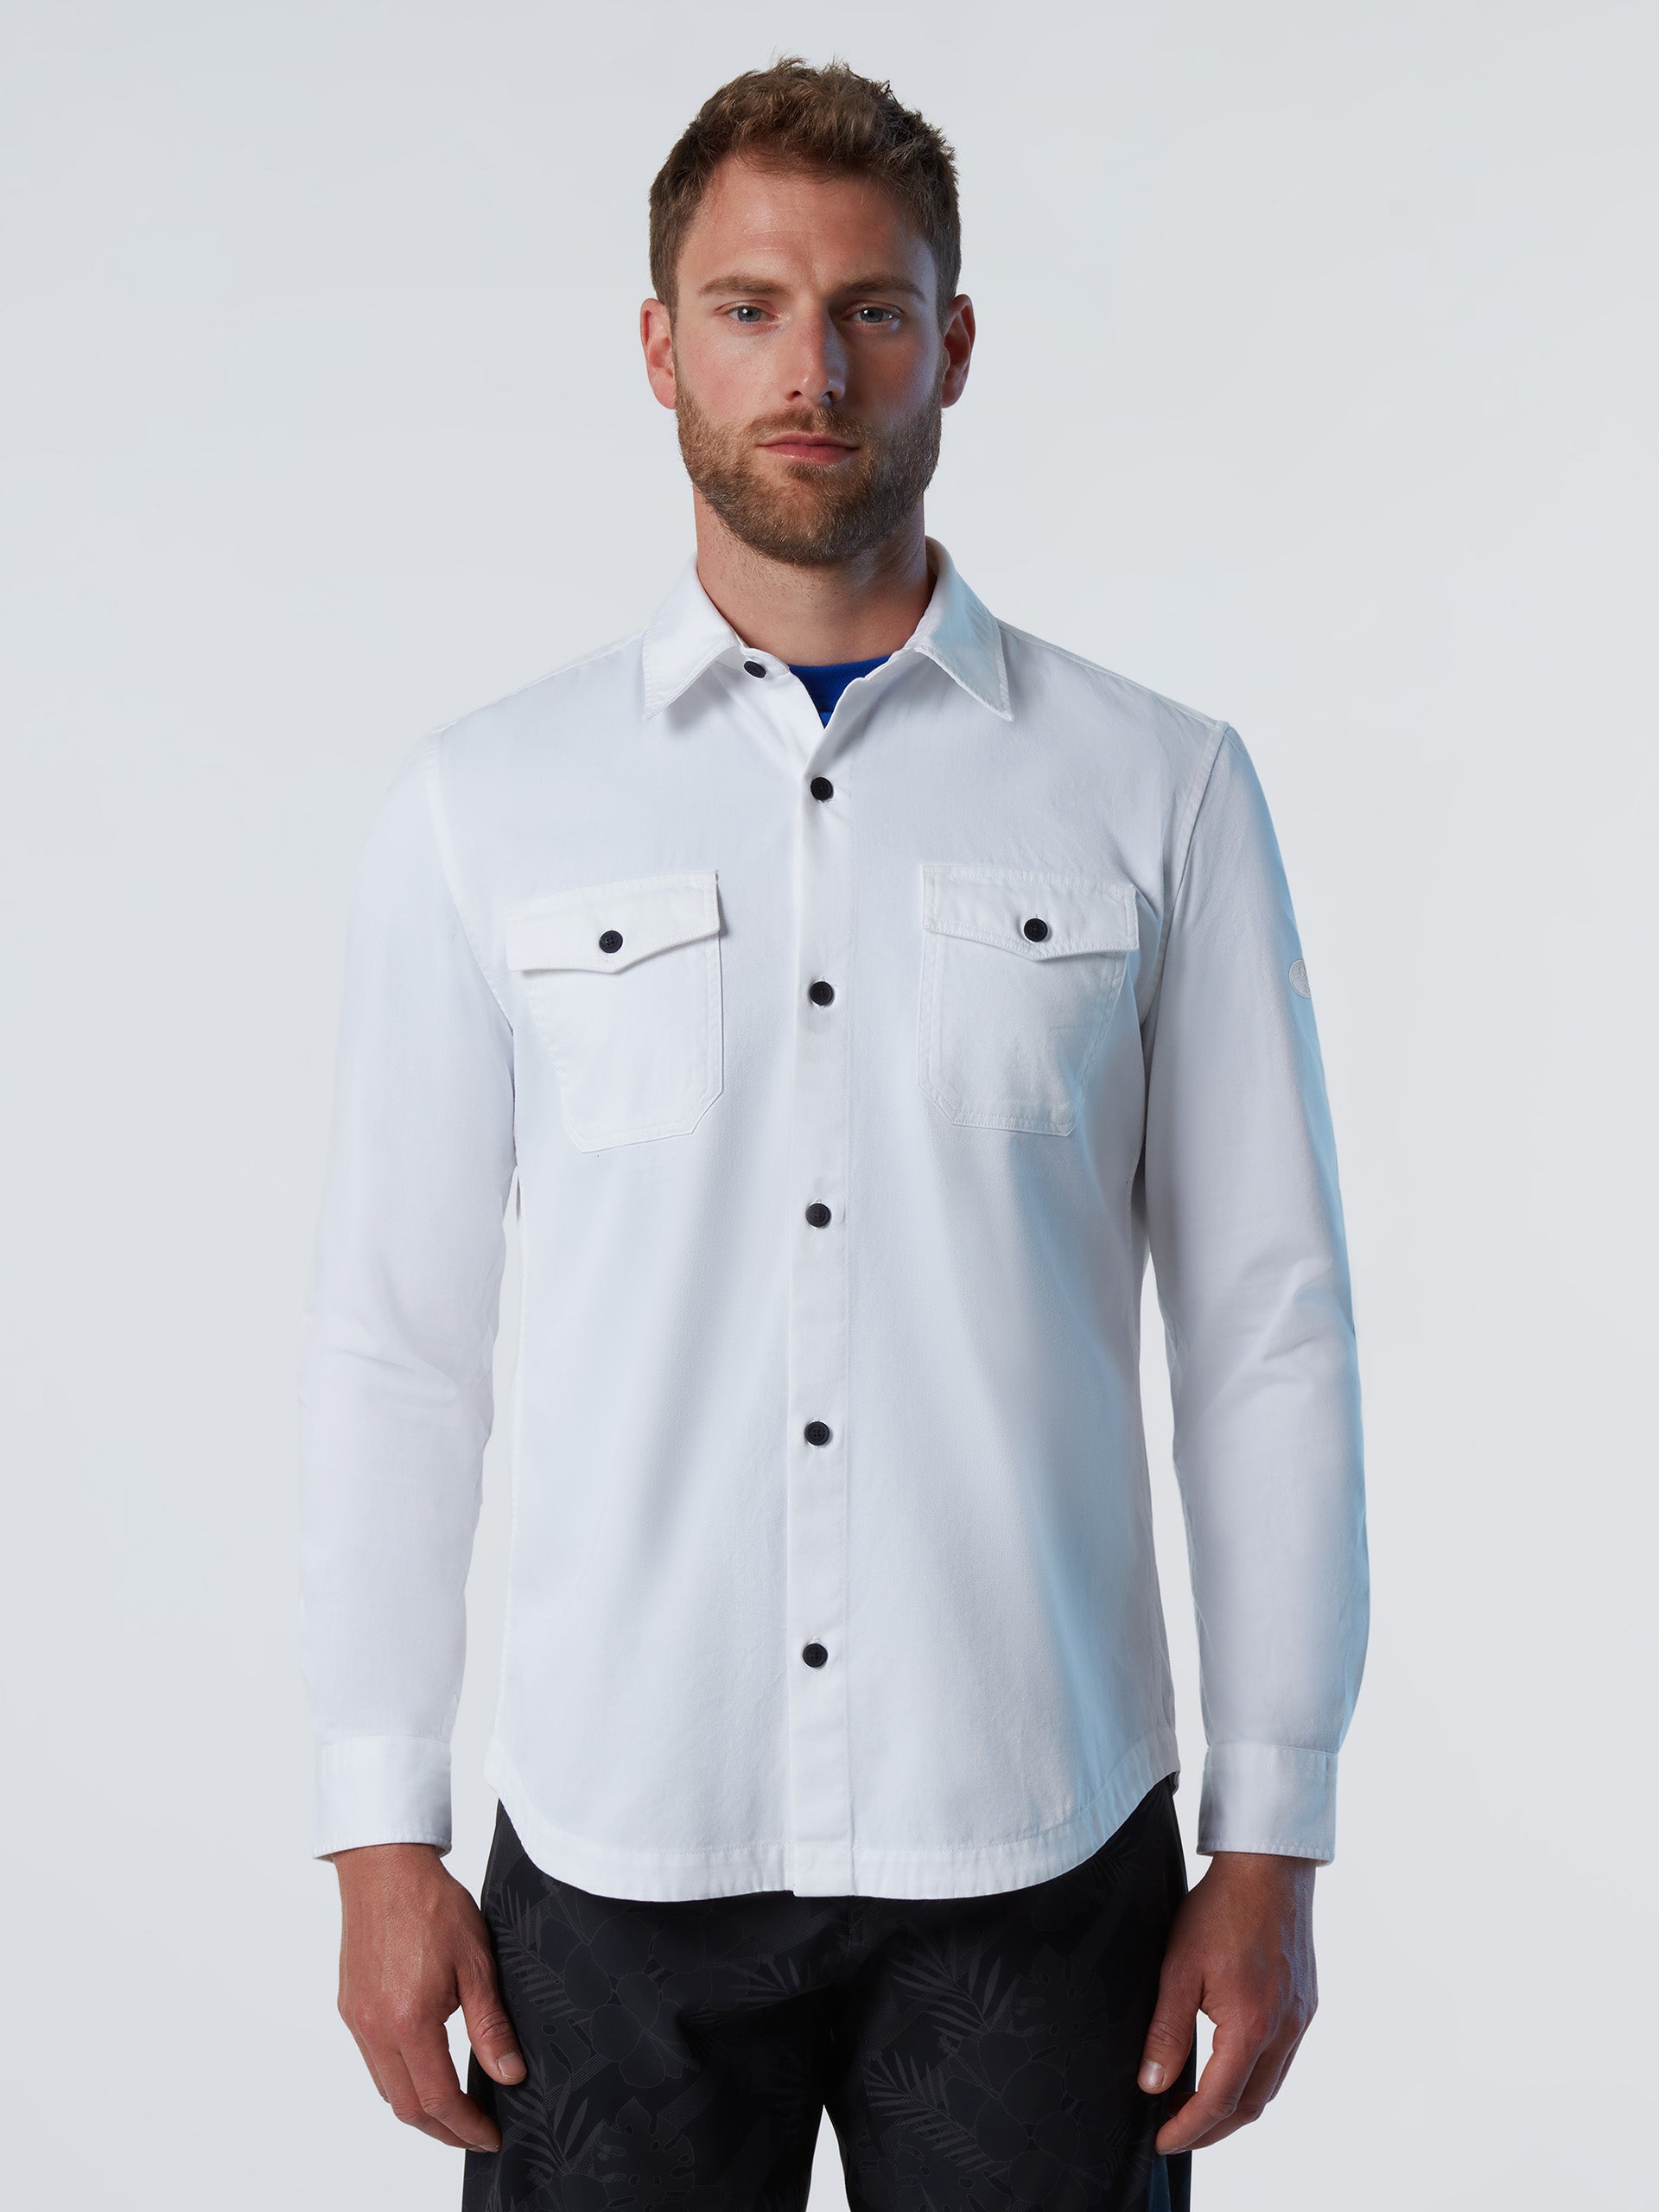 North Sails 2397 - Hombres Blanco - textil Camisetas manga corta